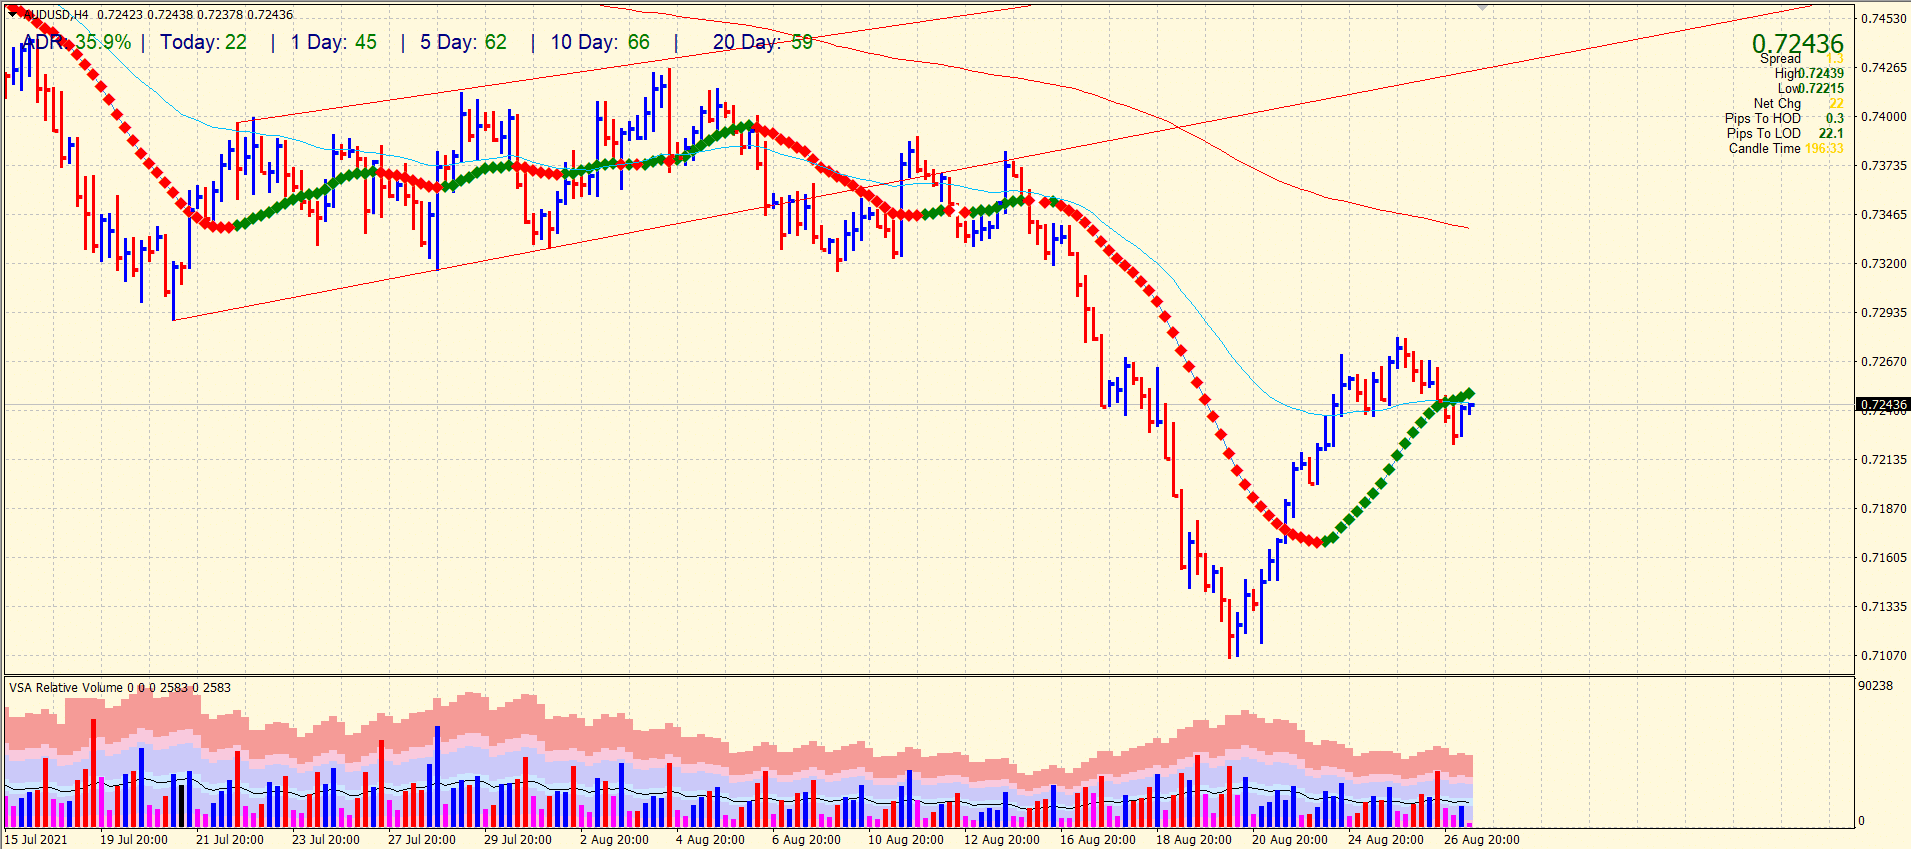 AUD/USD 4-hour price chart analysis